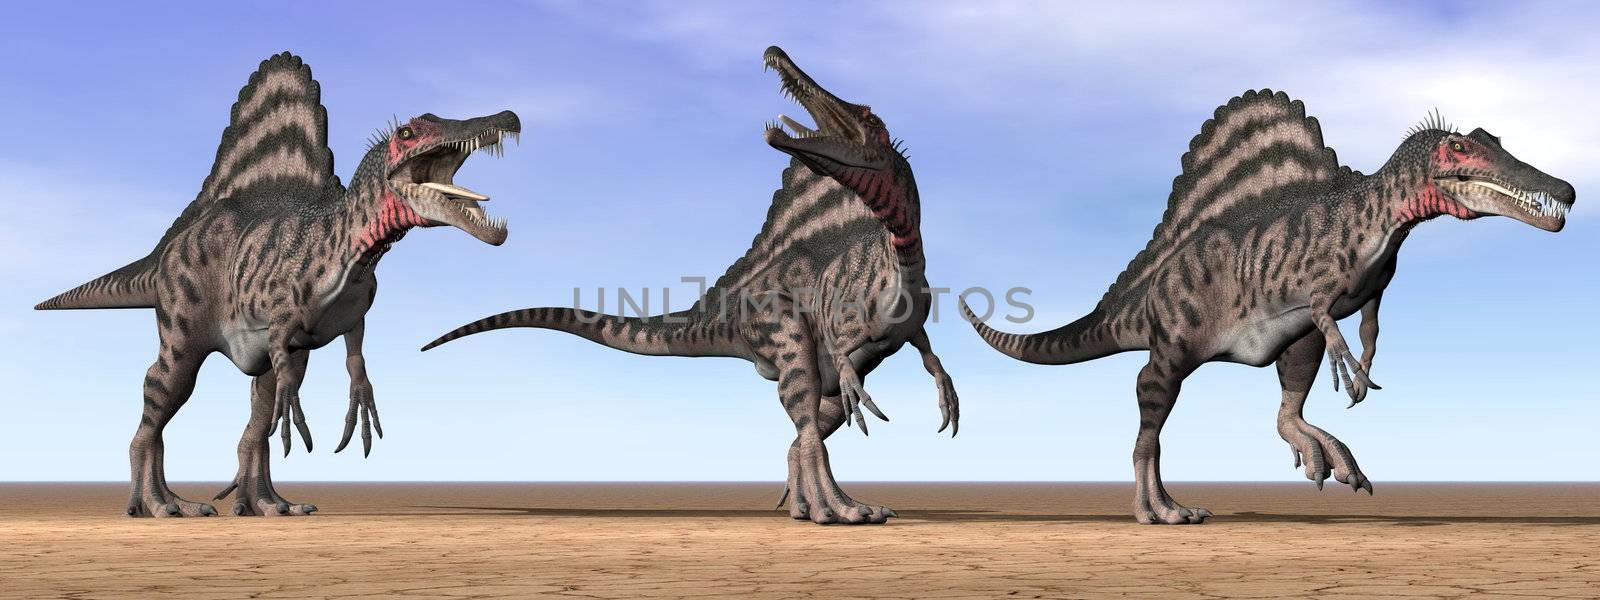 Spinosaurus dinosaurs in the desert - 3D render by Elenaphotos21